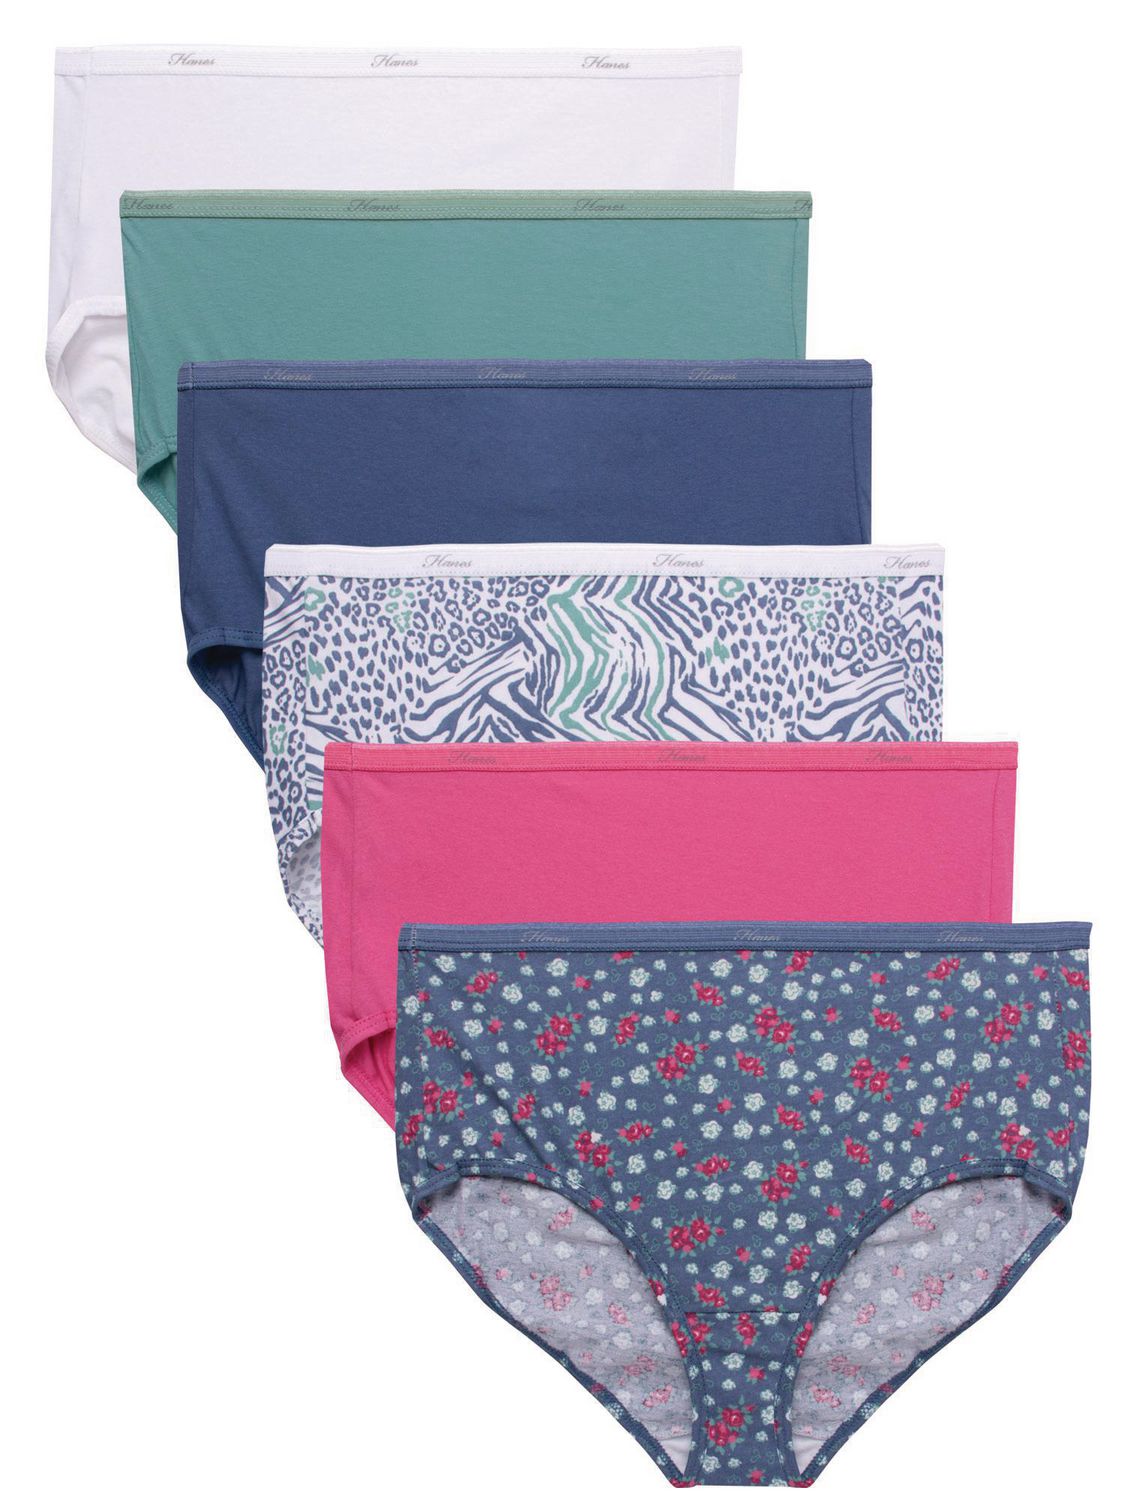 Hanes womens Cotton Brief Underwear, Black - 10 Pack, 6 US at   Women's Clothing store